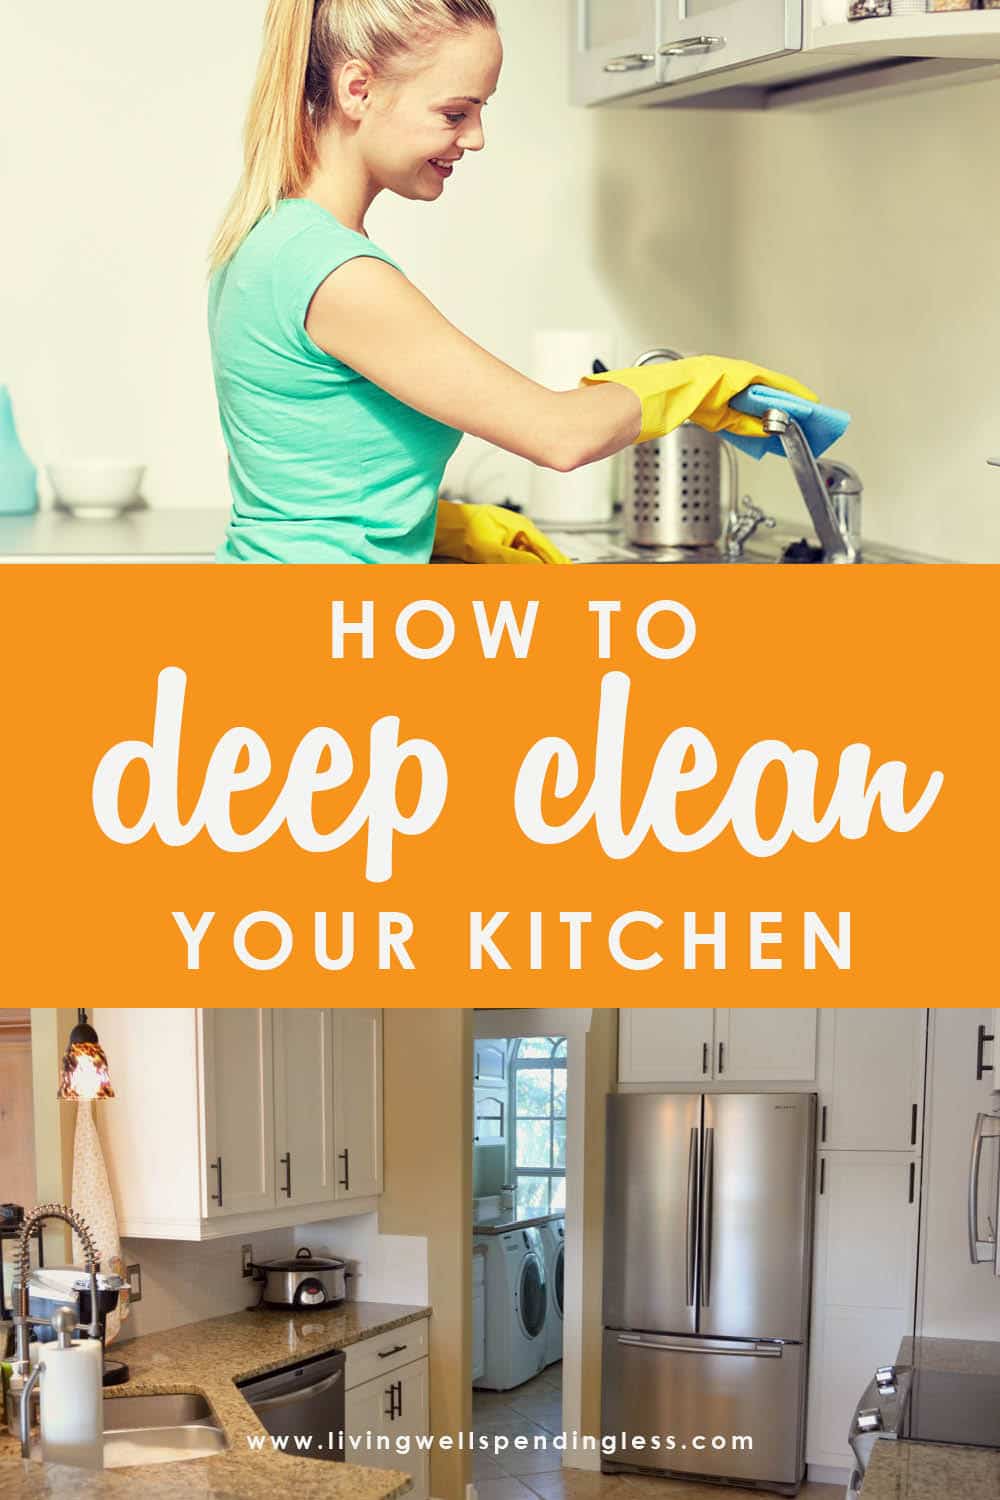 https://www.livingwellspendingless.com/wp-content/uploads/2013/03/How-to-Deep-Clean-Your-Kitchen_Vertical_1000x1500.jpg